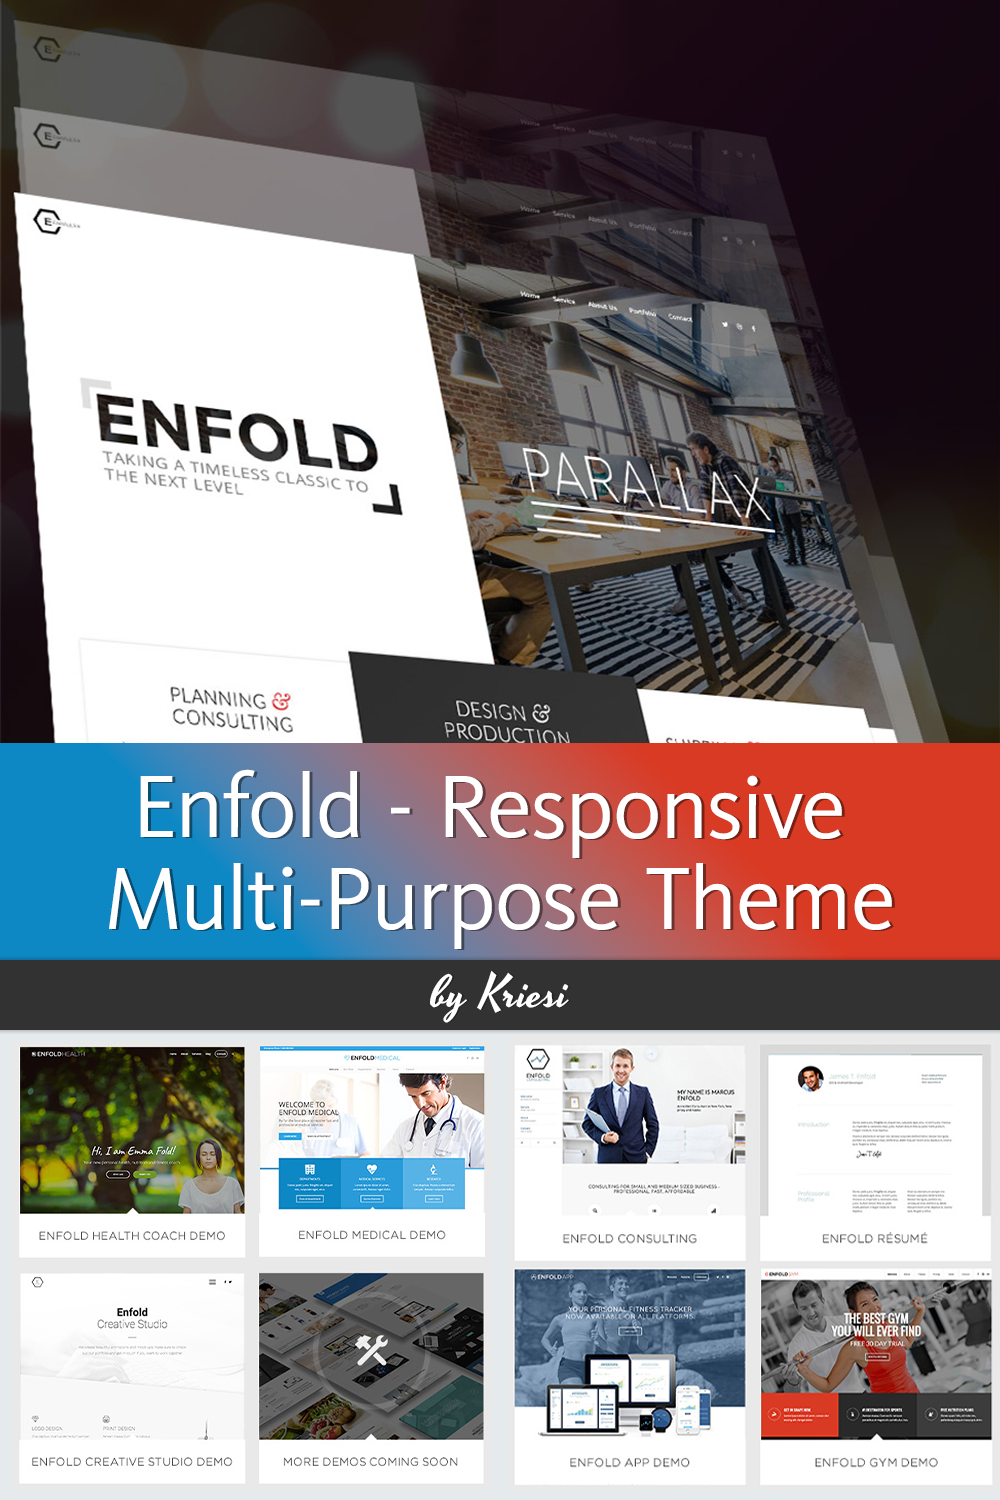 Enfold responsive multi purpose theme of pinterest.